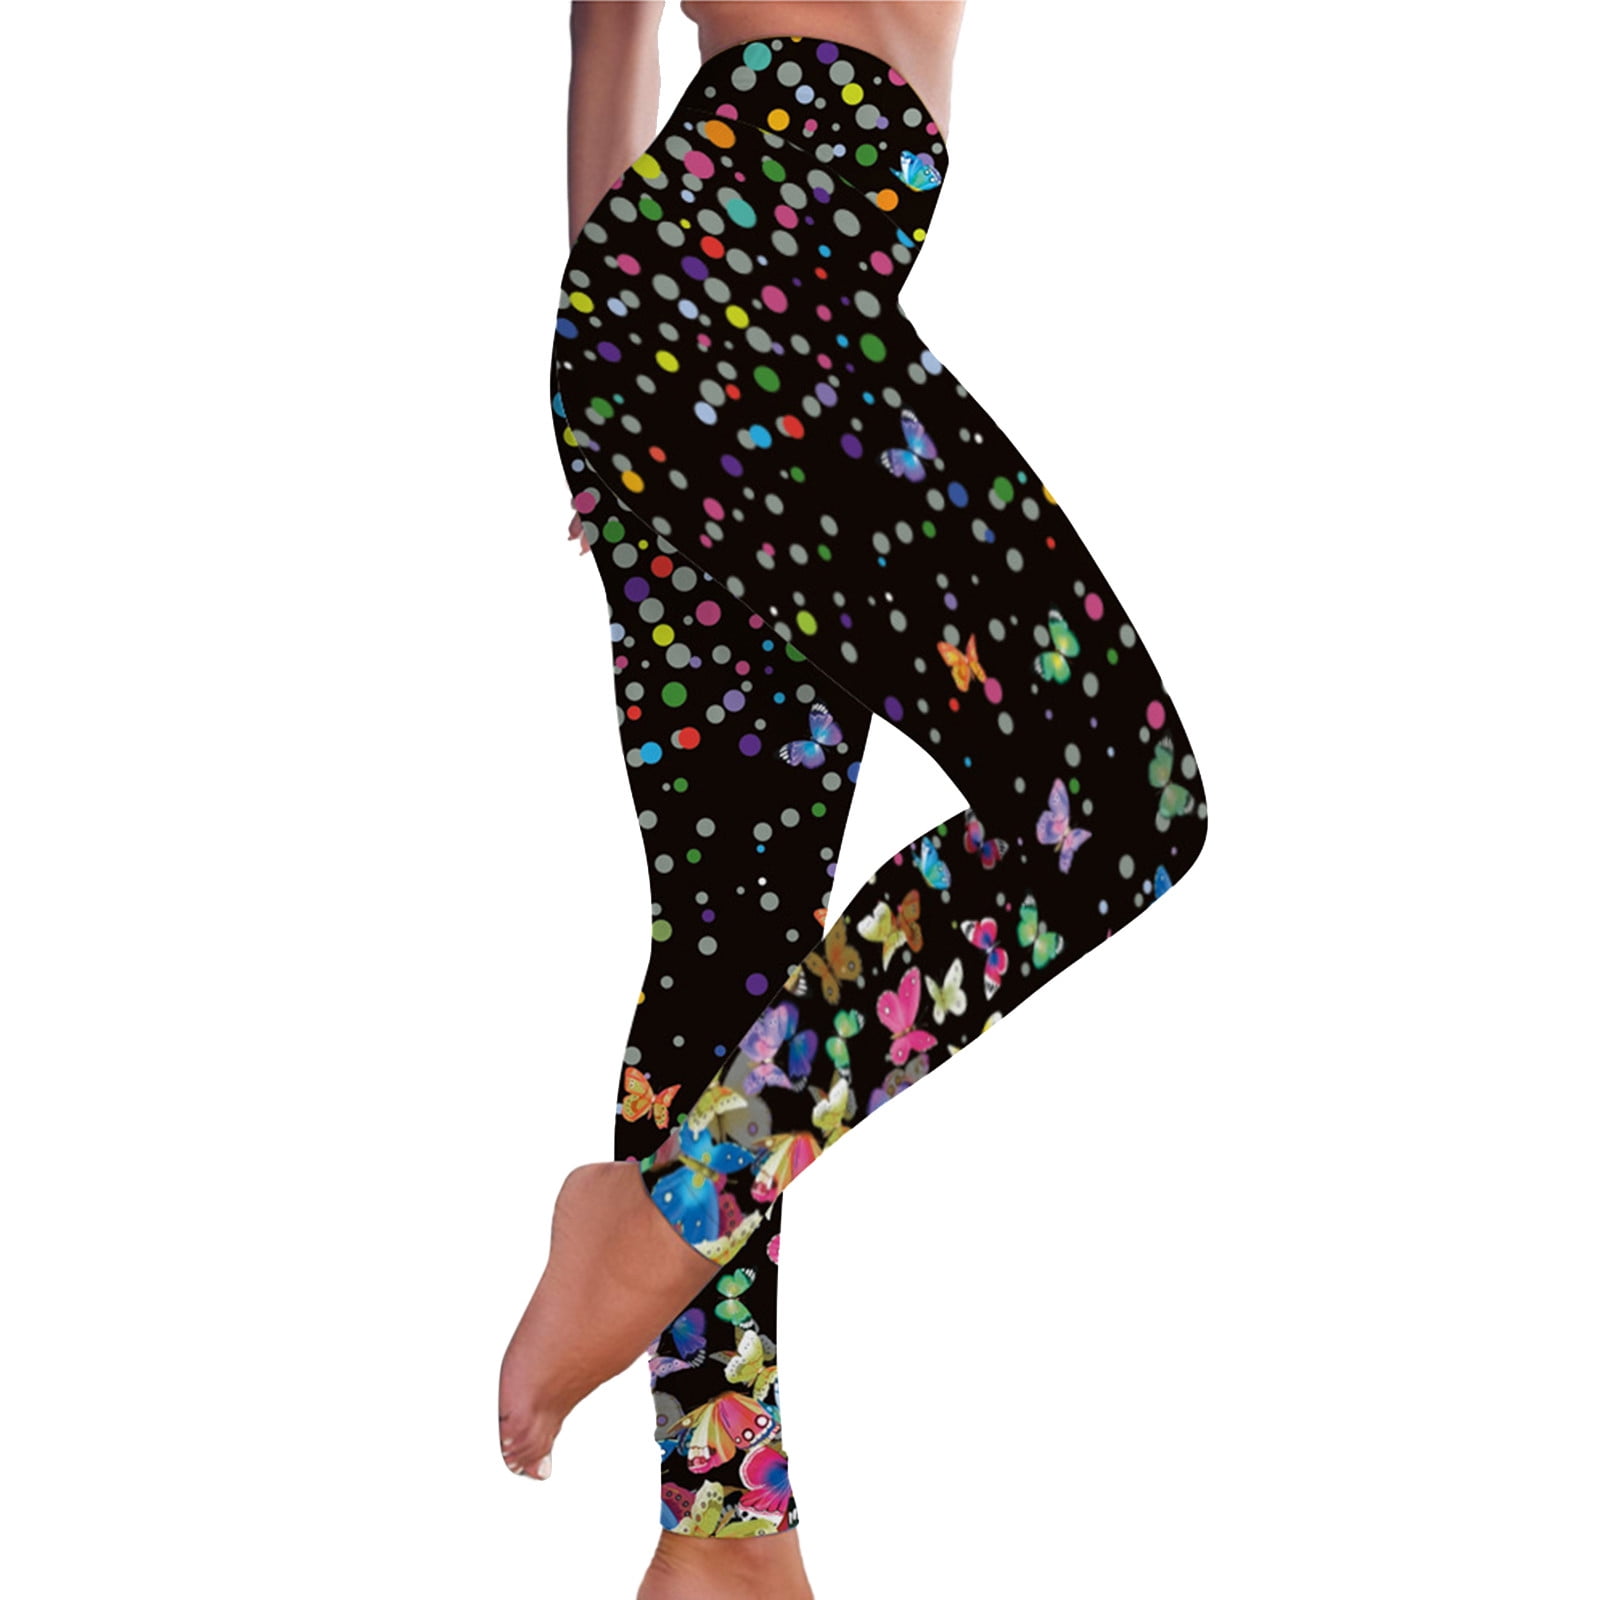 Share 157+ fashion printed leggings best